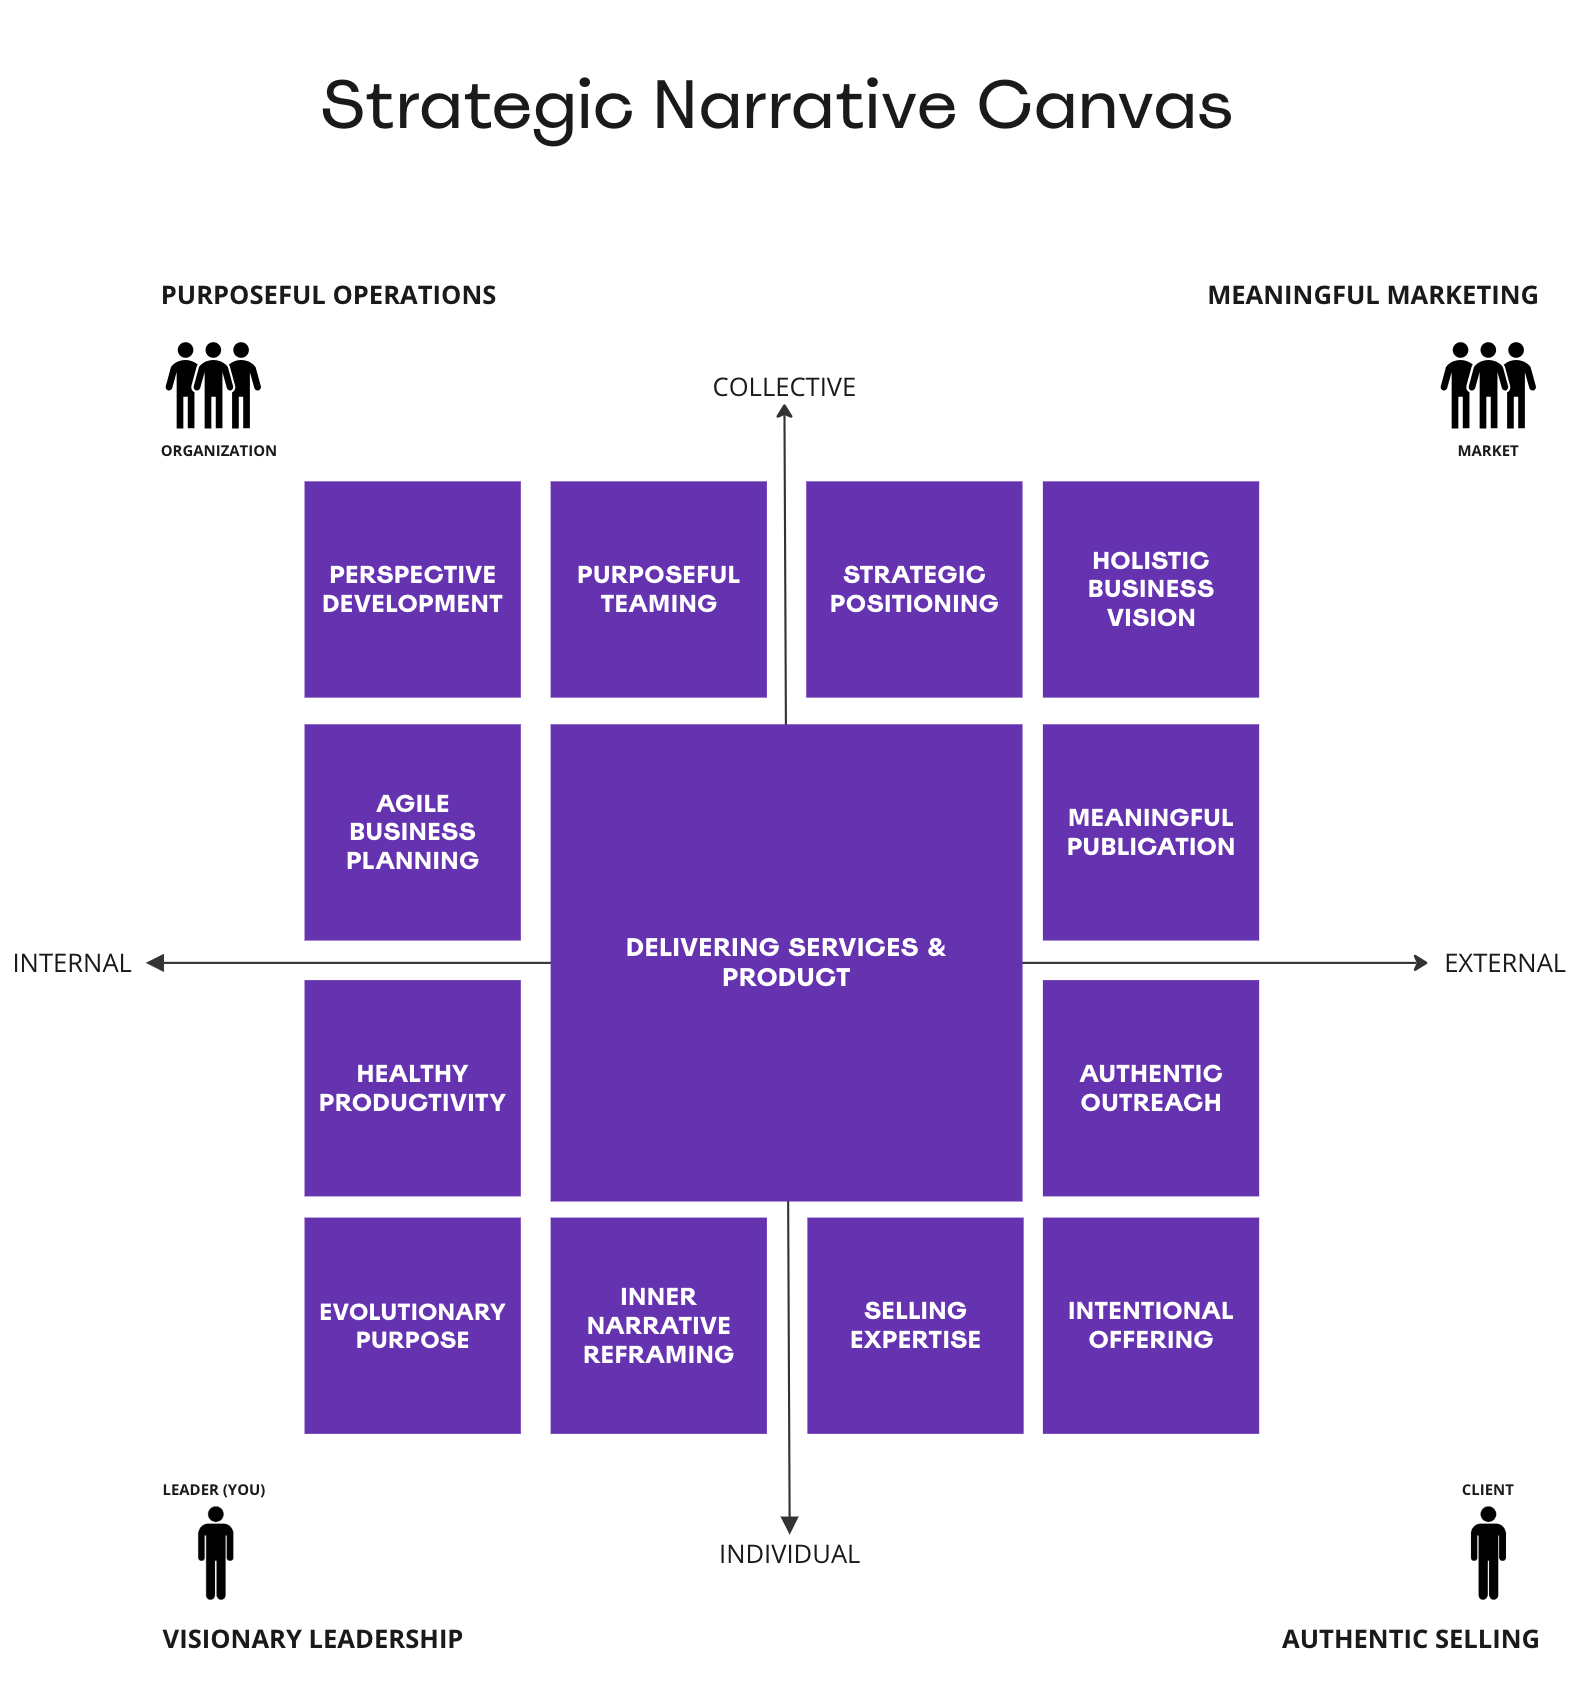 The Strategic Narrative Canvas